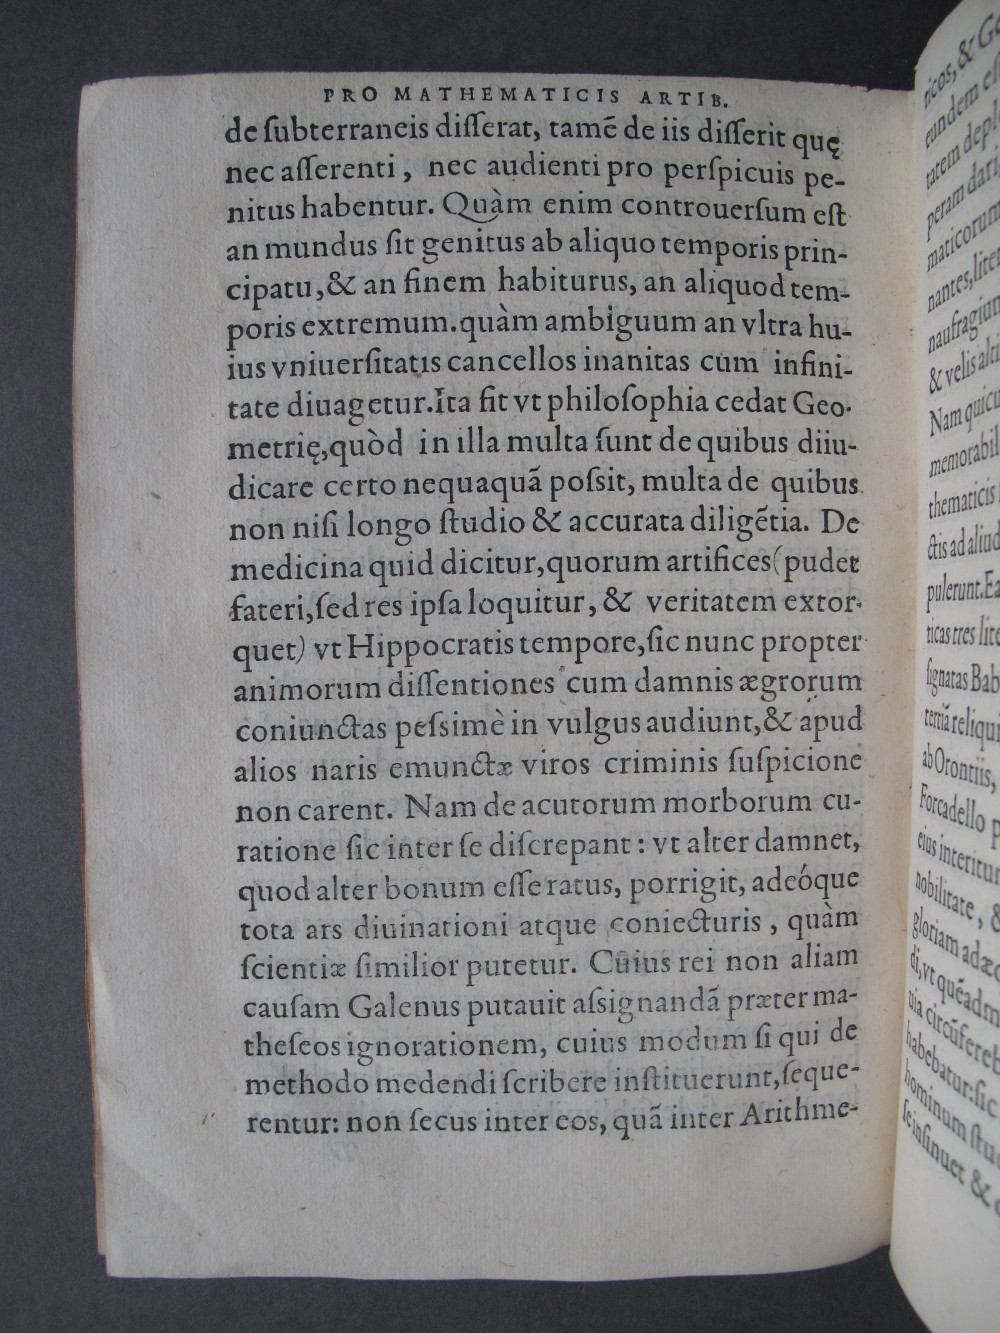 Folio 13 verso